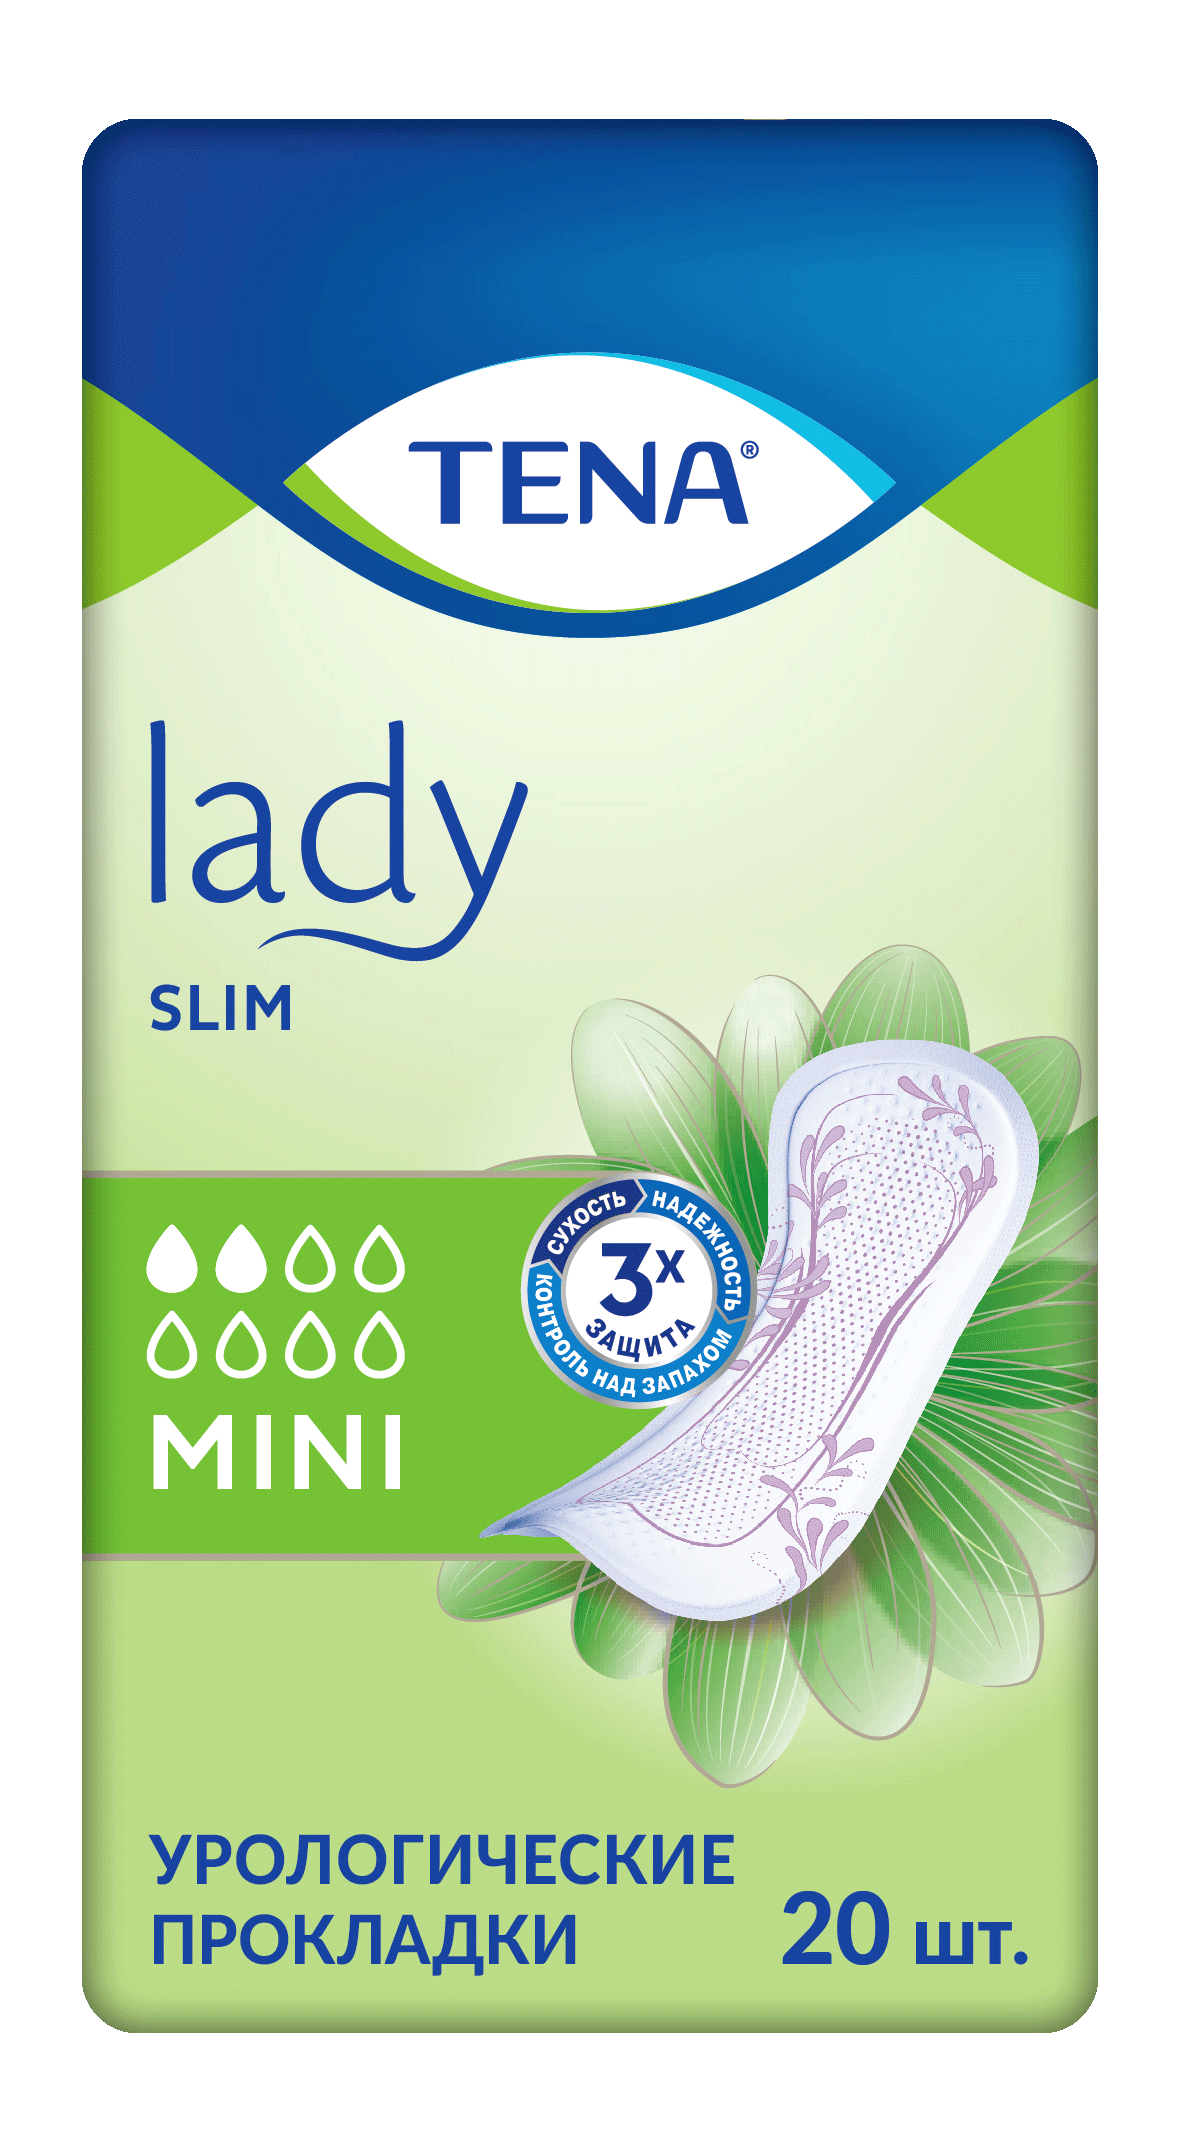 TENA Lady Slim Mini, прокладки урологические, 20 шт.